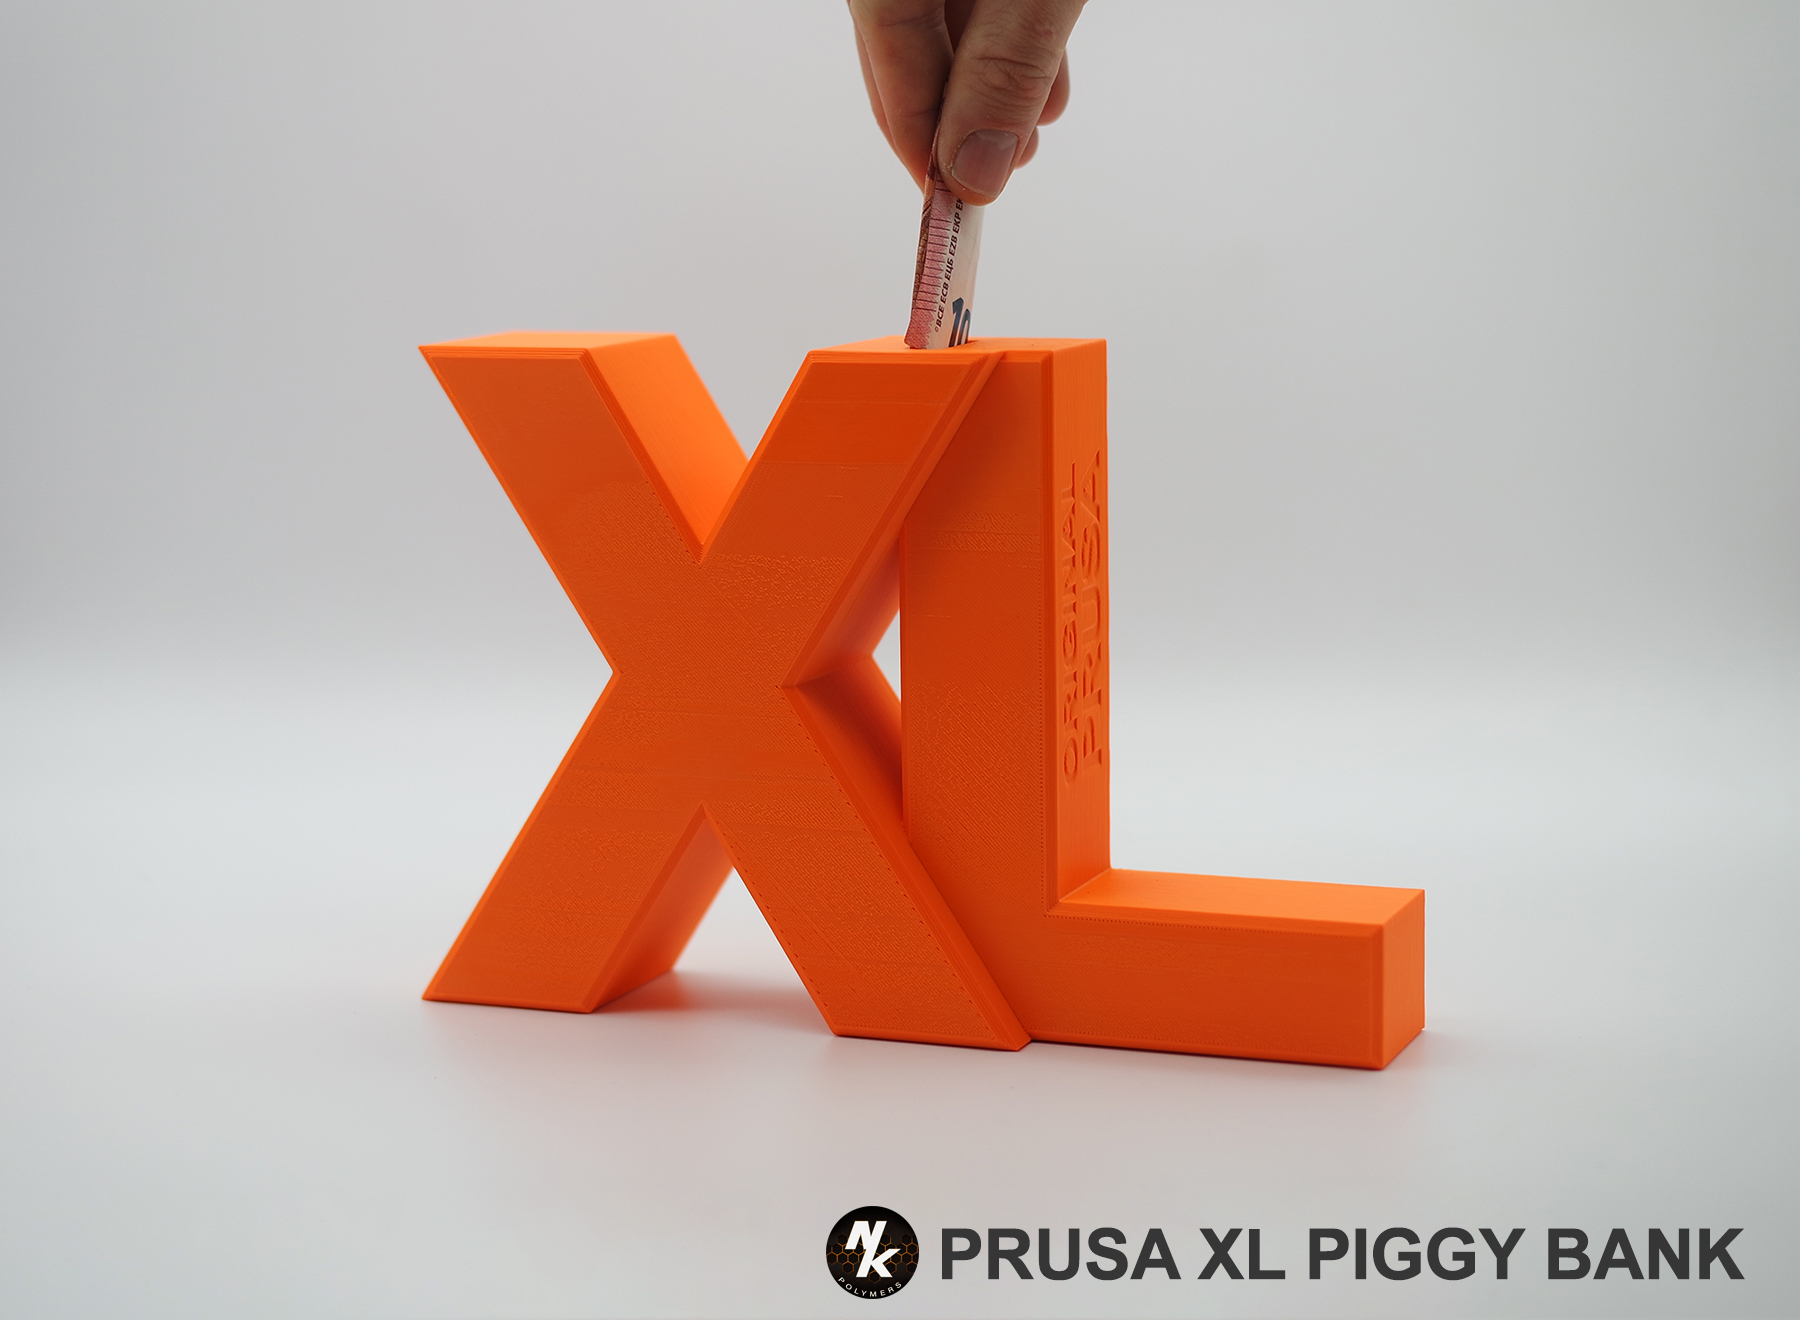 Prusa XL Piggy Bank